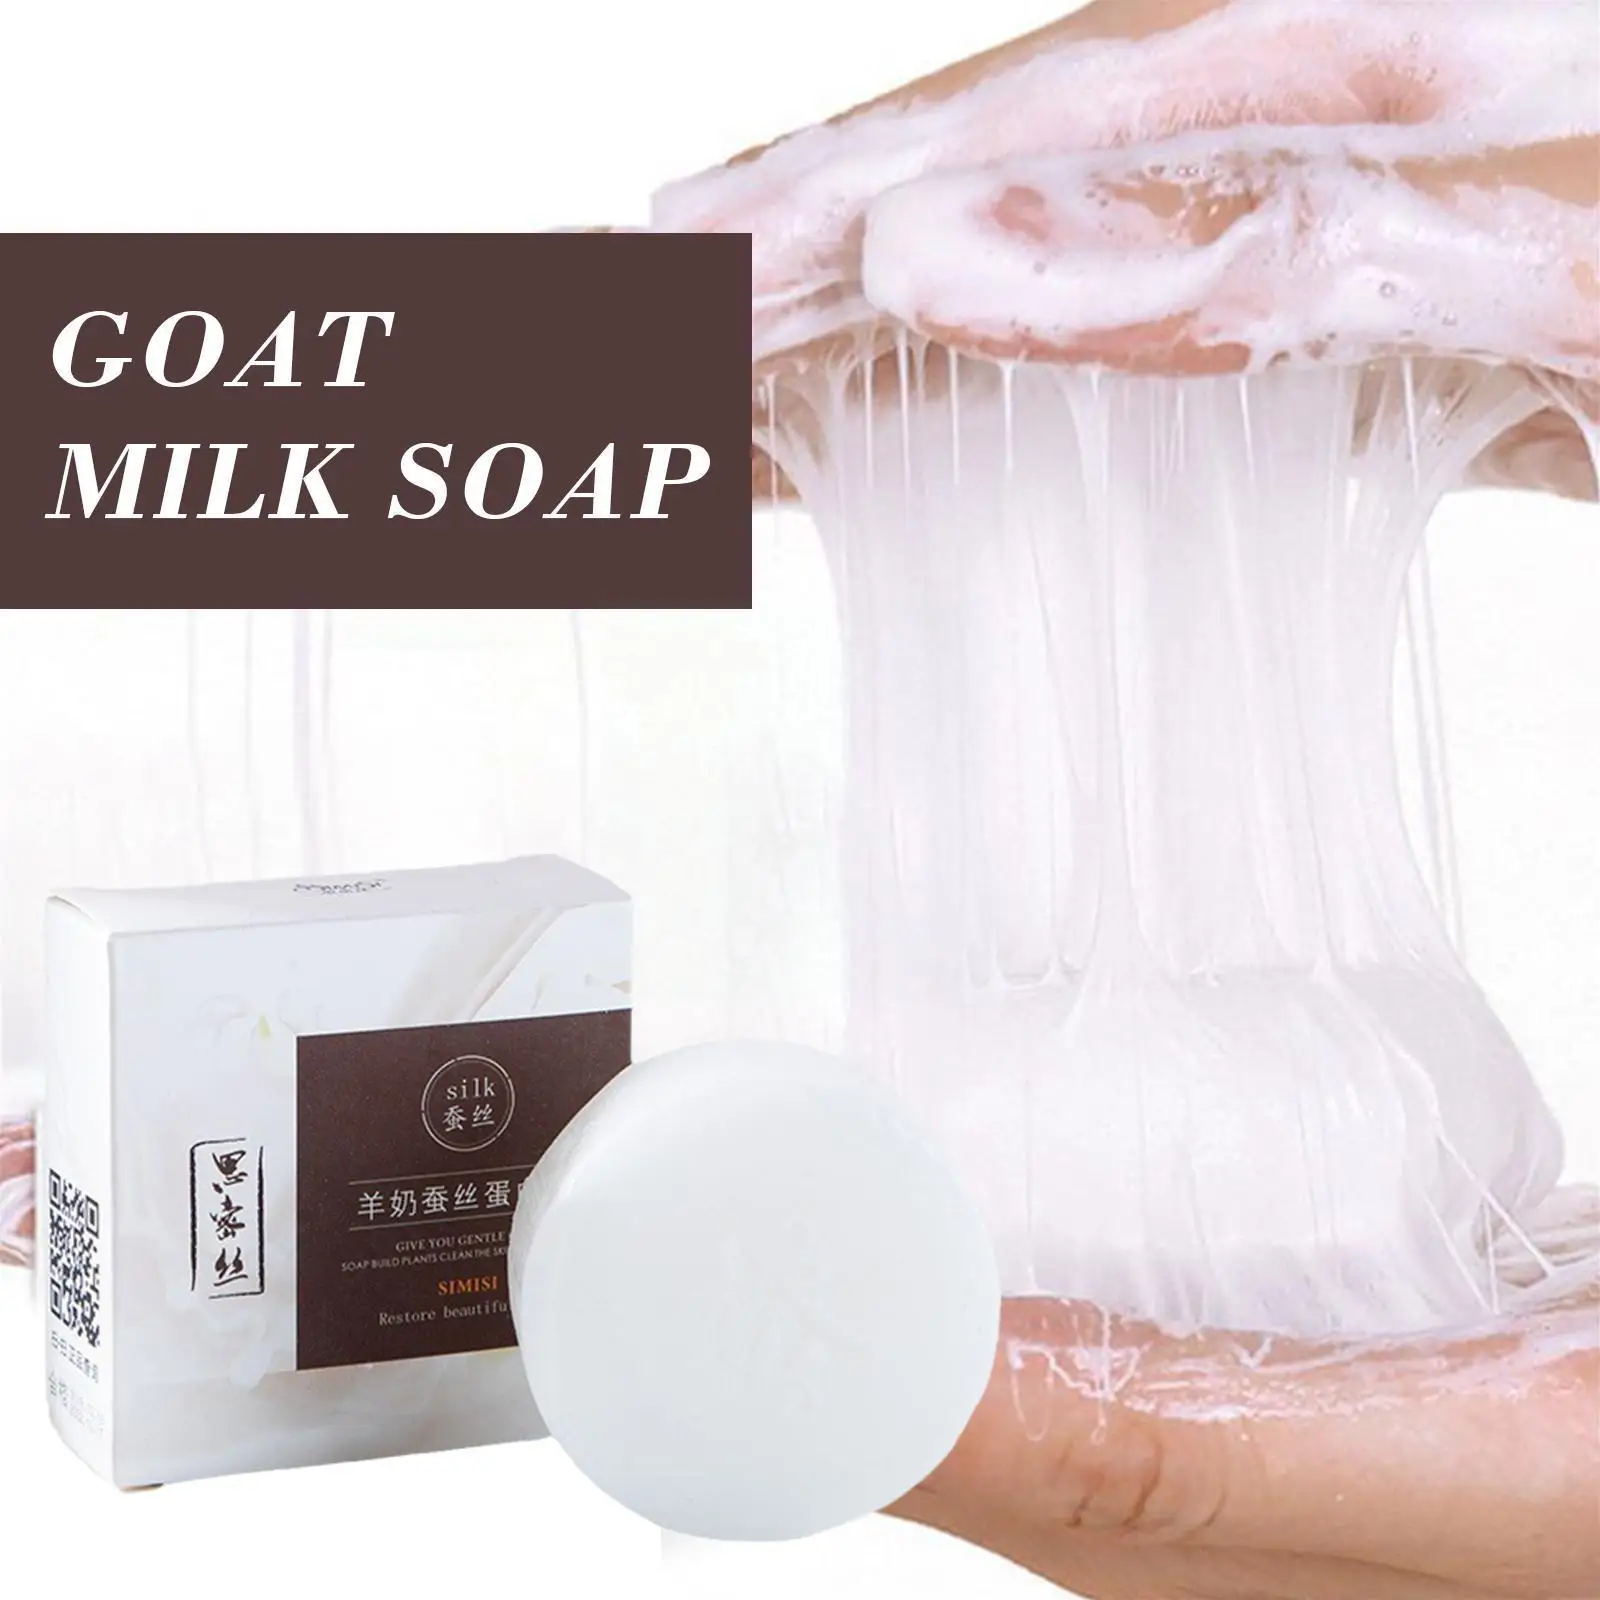 

Goat Milk Soap Original Wholesale Handmade Soap Rice Milk Whitening Soap Goat Milk Soap Protein Soap For Whitening Facial S O2R8